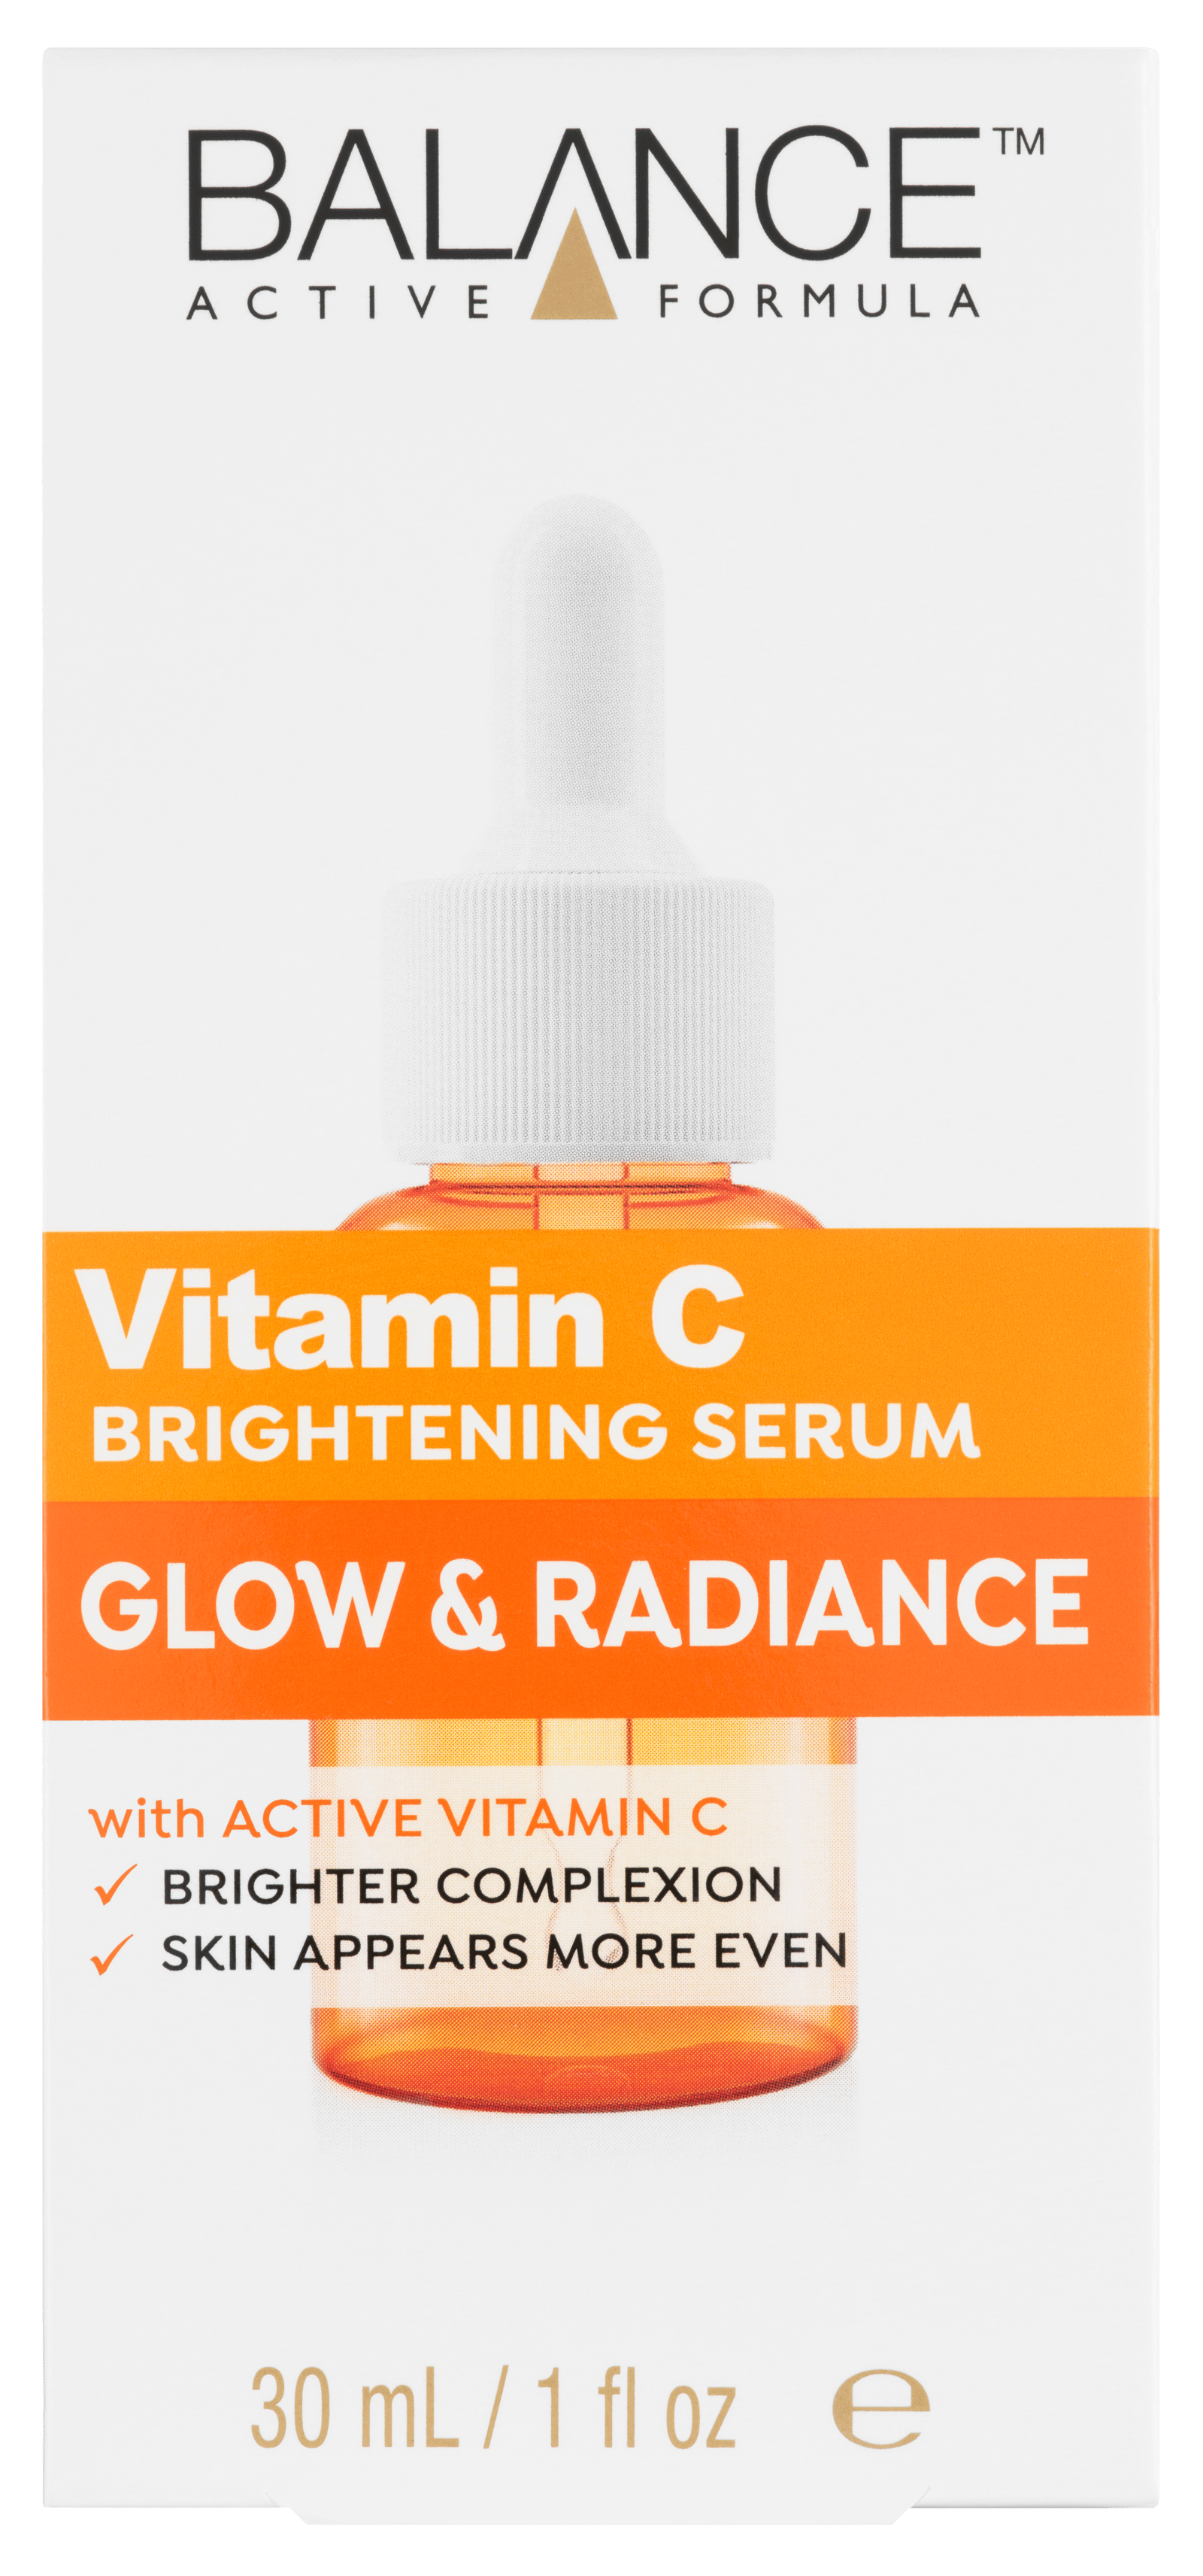 Balance Active Formula Vitamin C Brightening Serum 30 ml